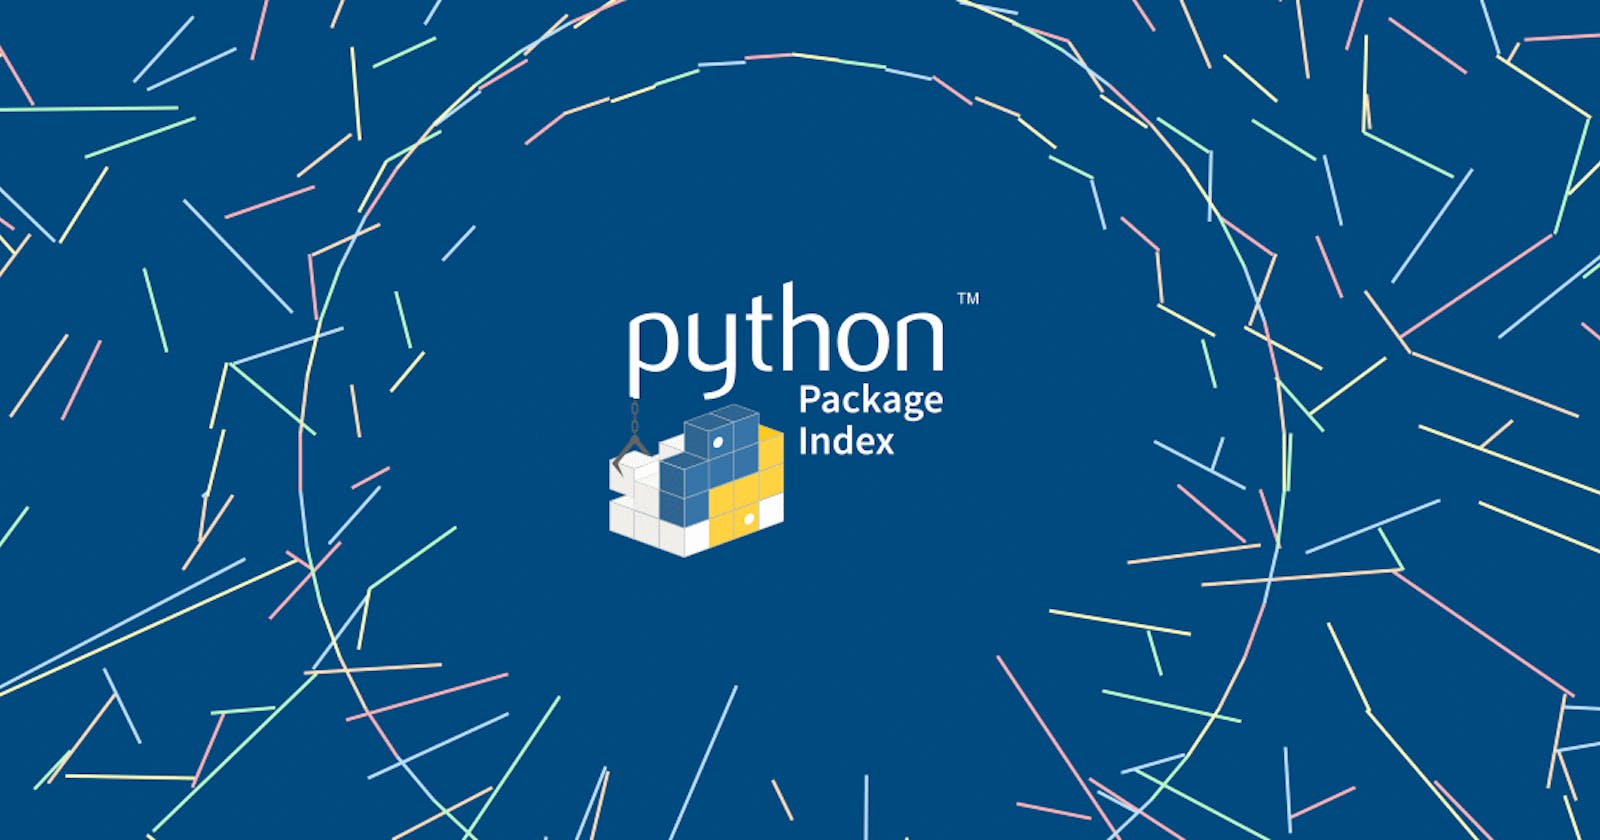 I Published the Python Package on PyPi : pip install google-address-to-latlong-csv